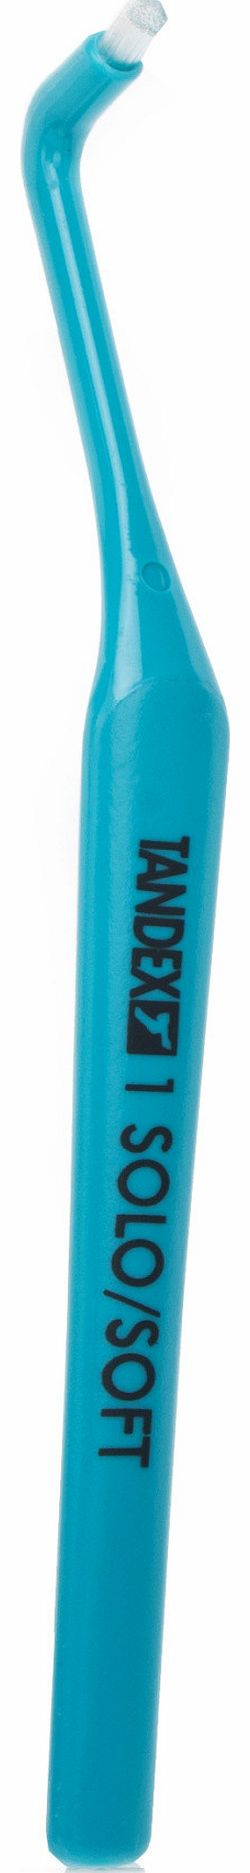 Tandex Solo Medium Interdental Brush